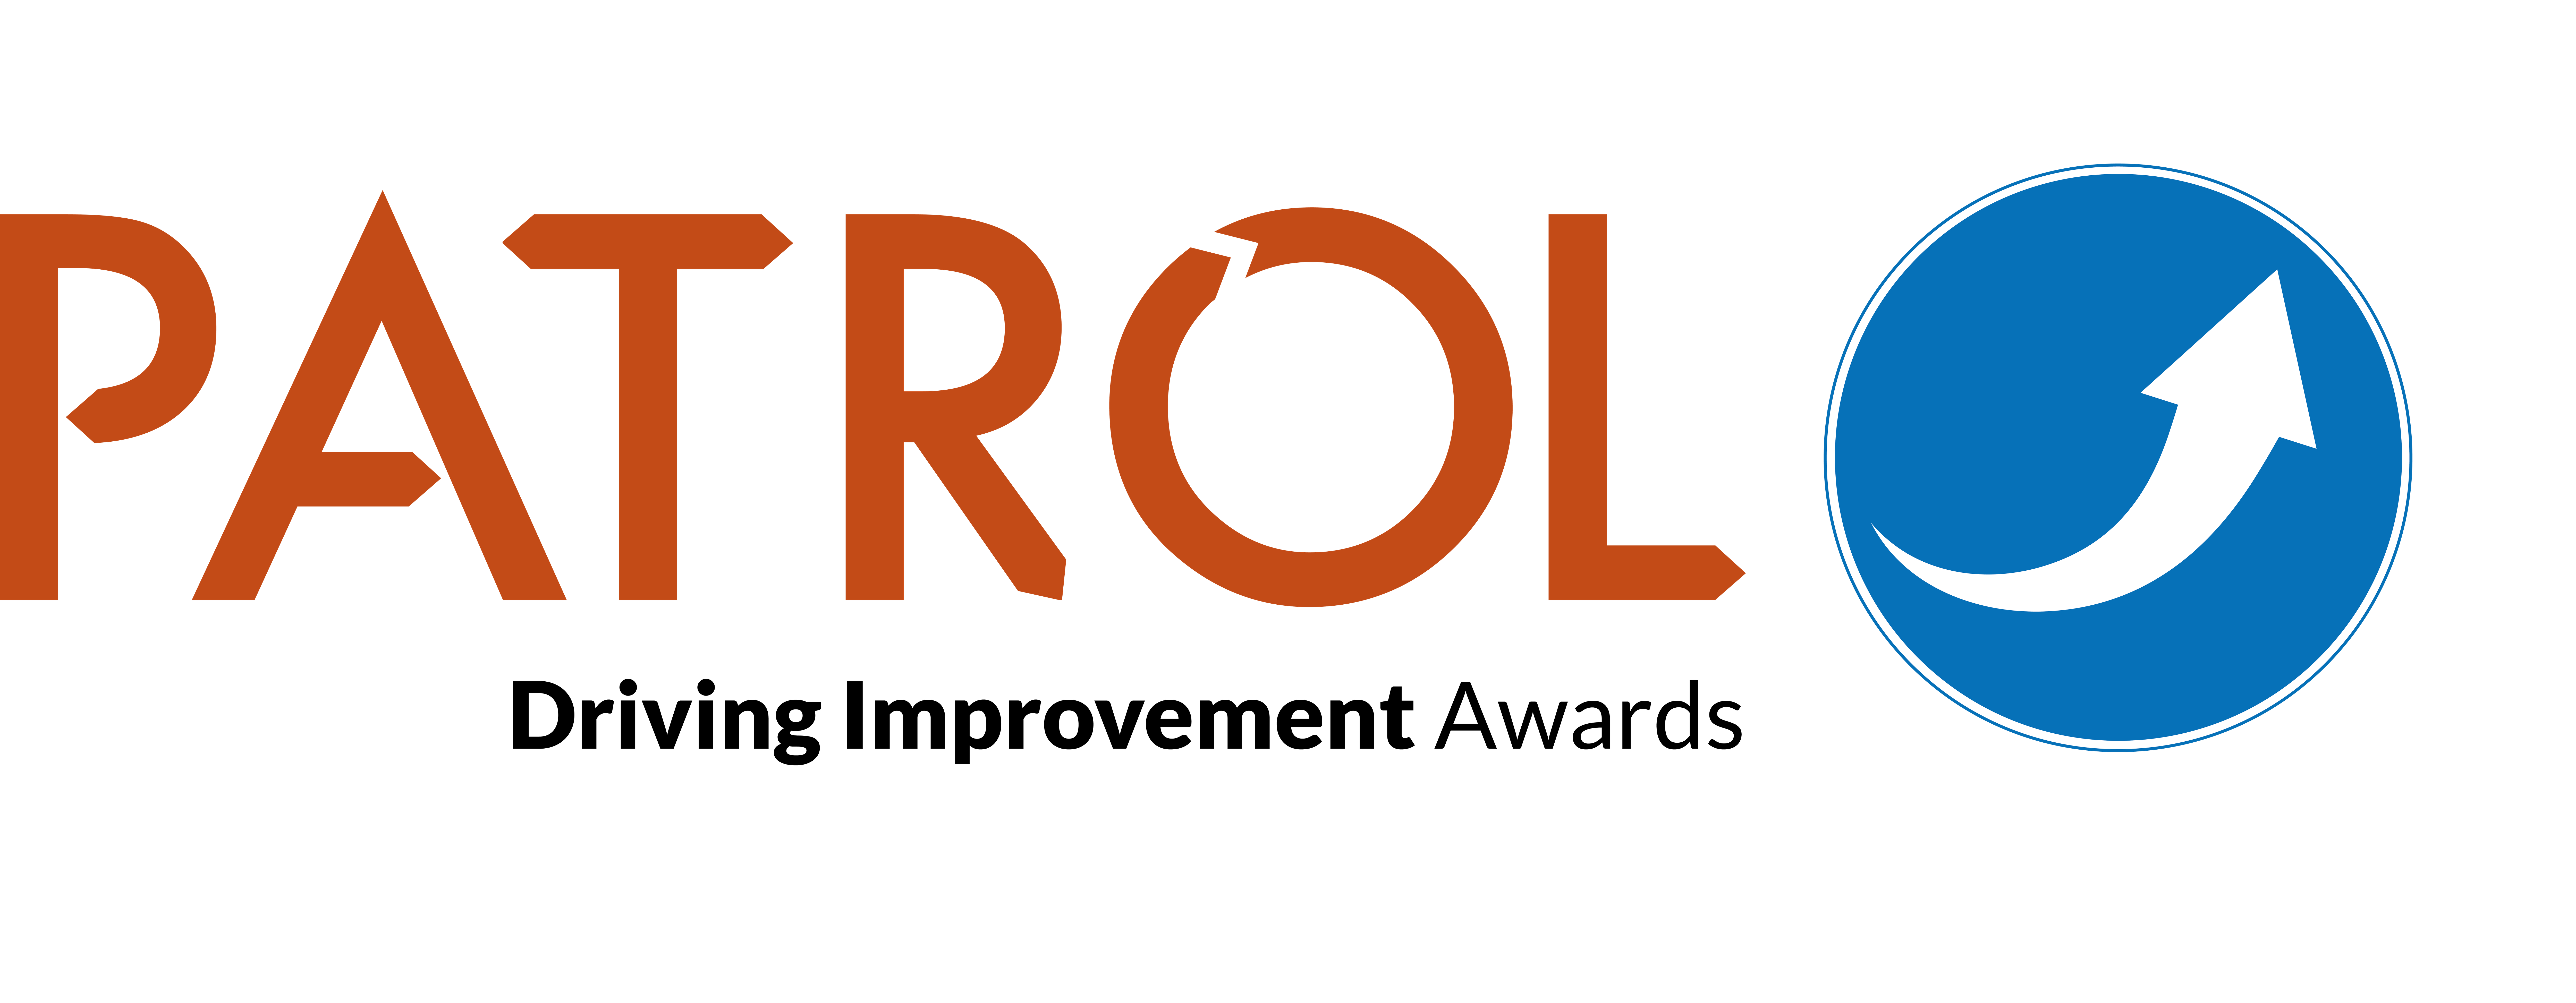 Driving Improvement Awards Logo